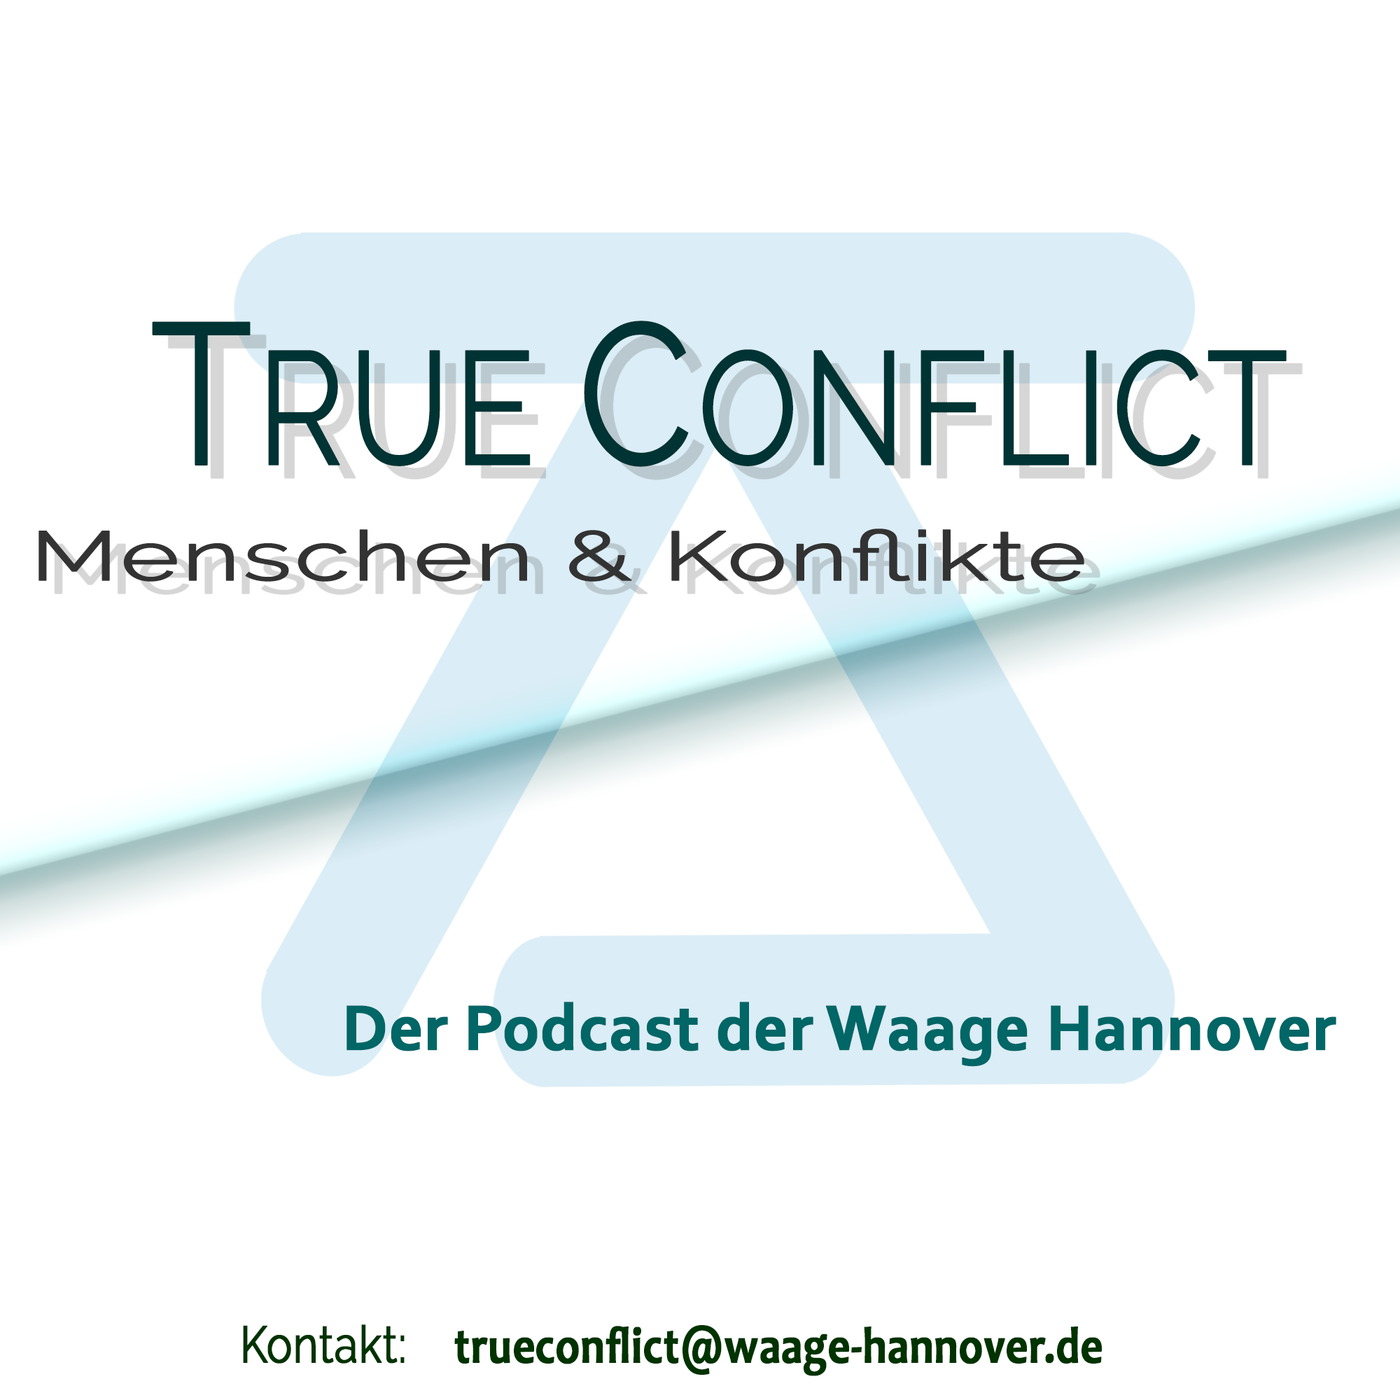 True Conflict - Menschen & Konflikte